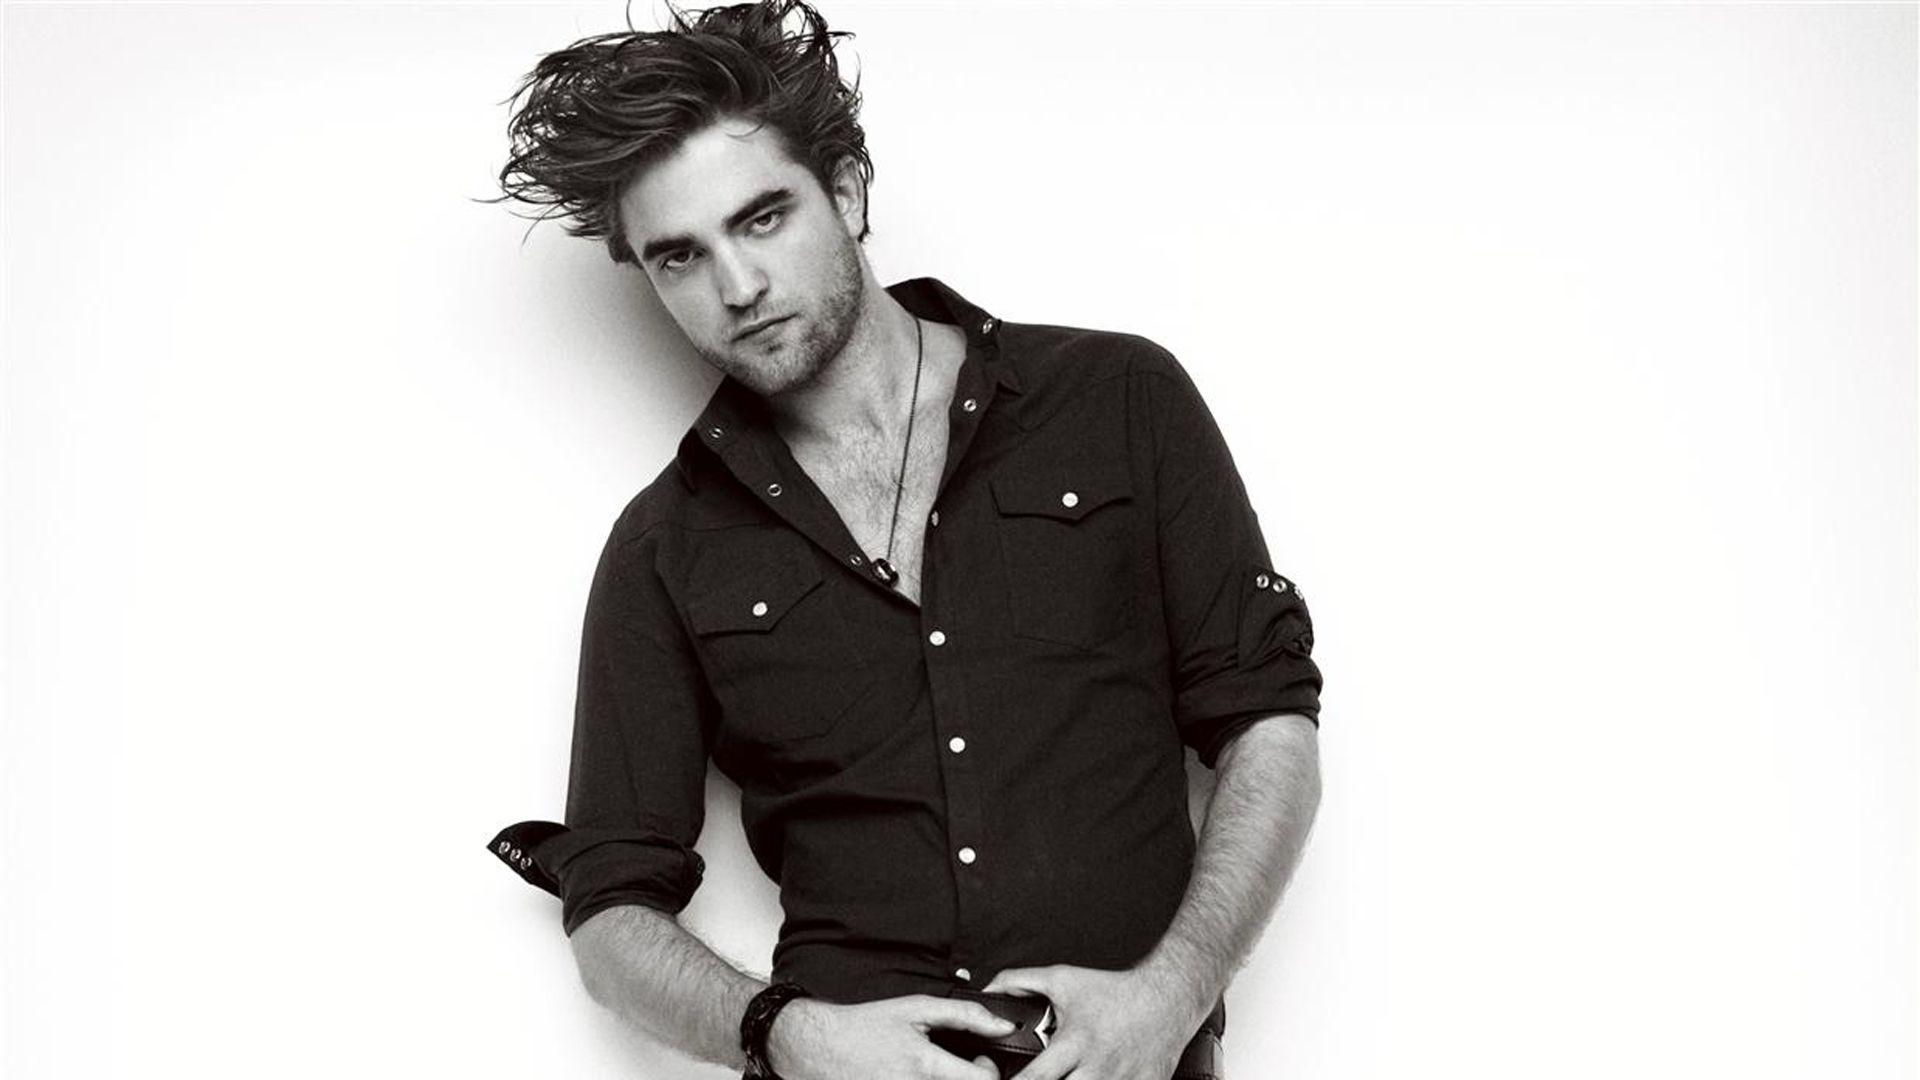 Robert Pattinson Wallpapers, Adorable HDQ Backgrounds of Robert